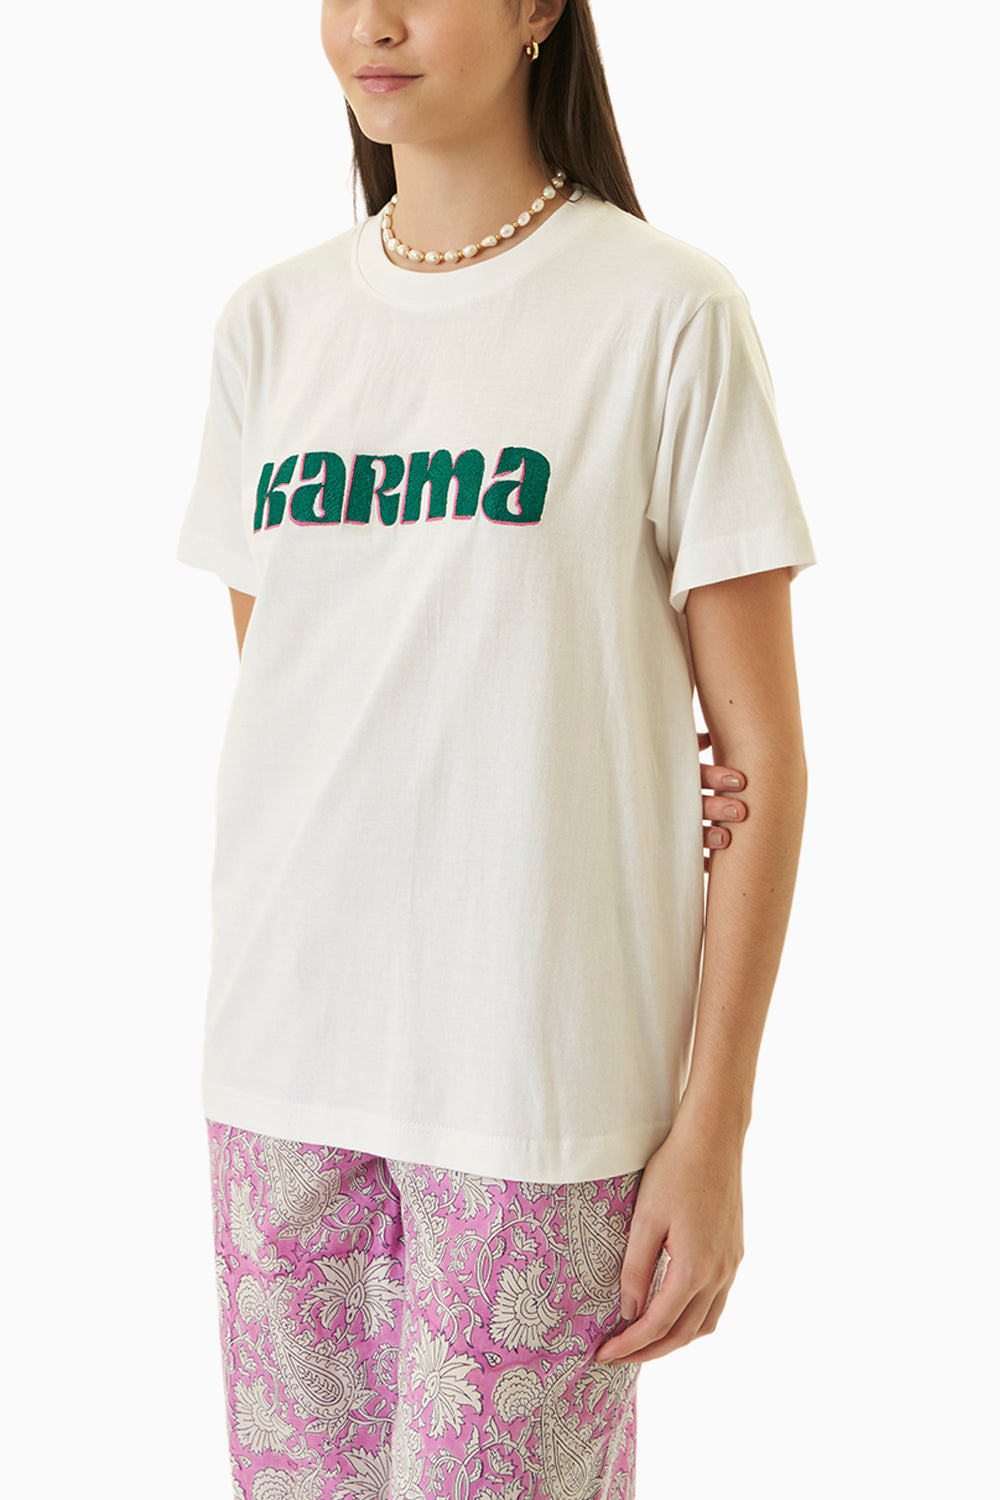 Karma Embroidered T-shirt